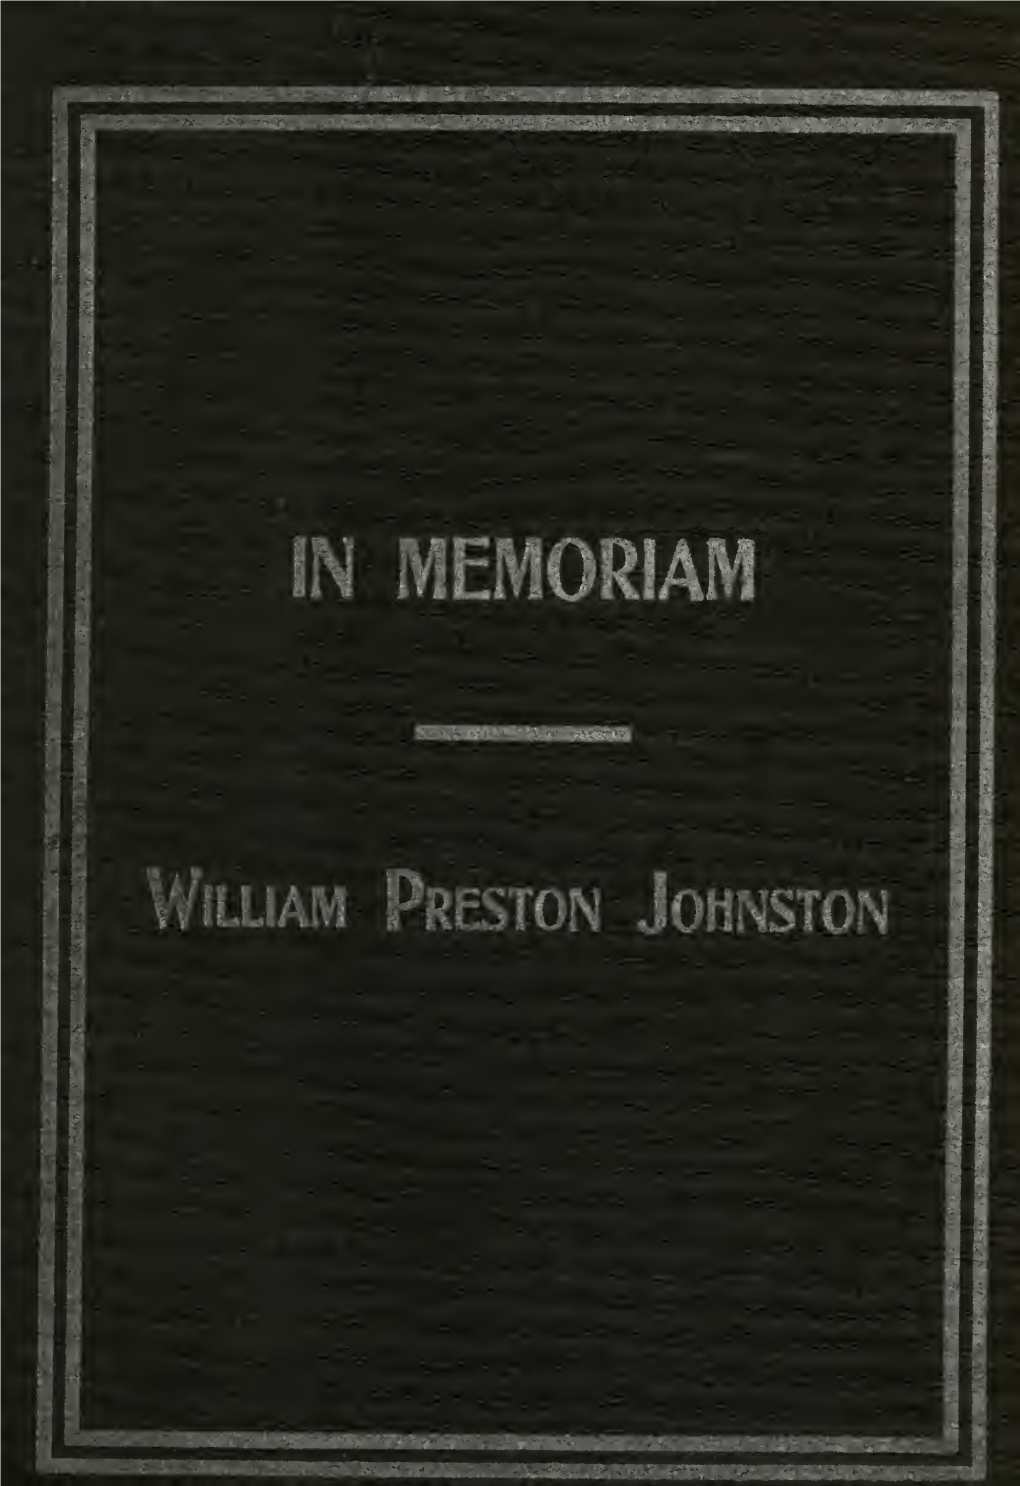 Memorial Service in Honor of William Preston